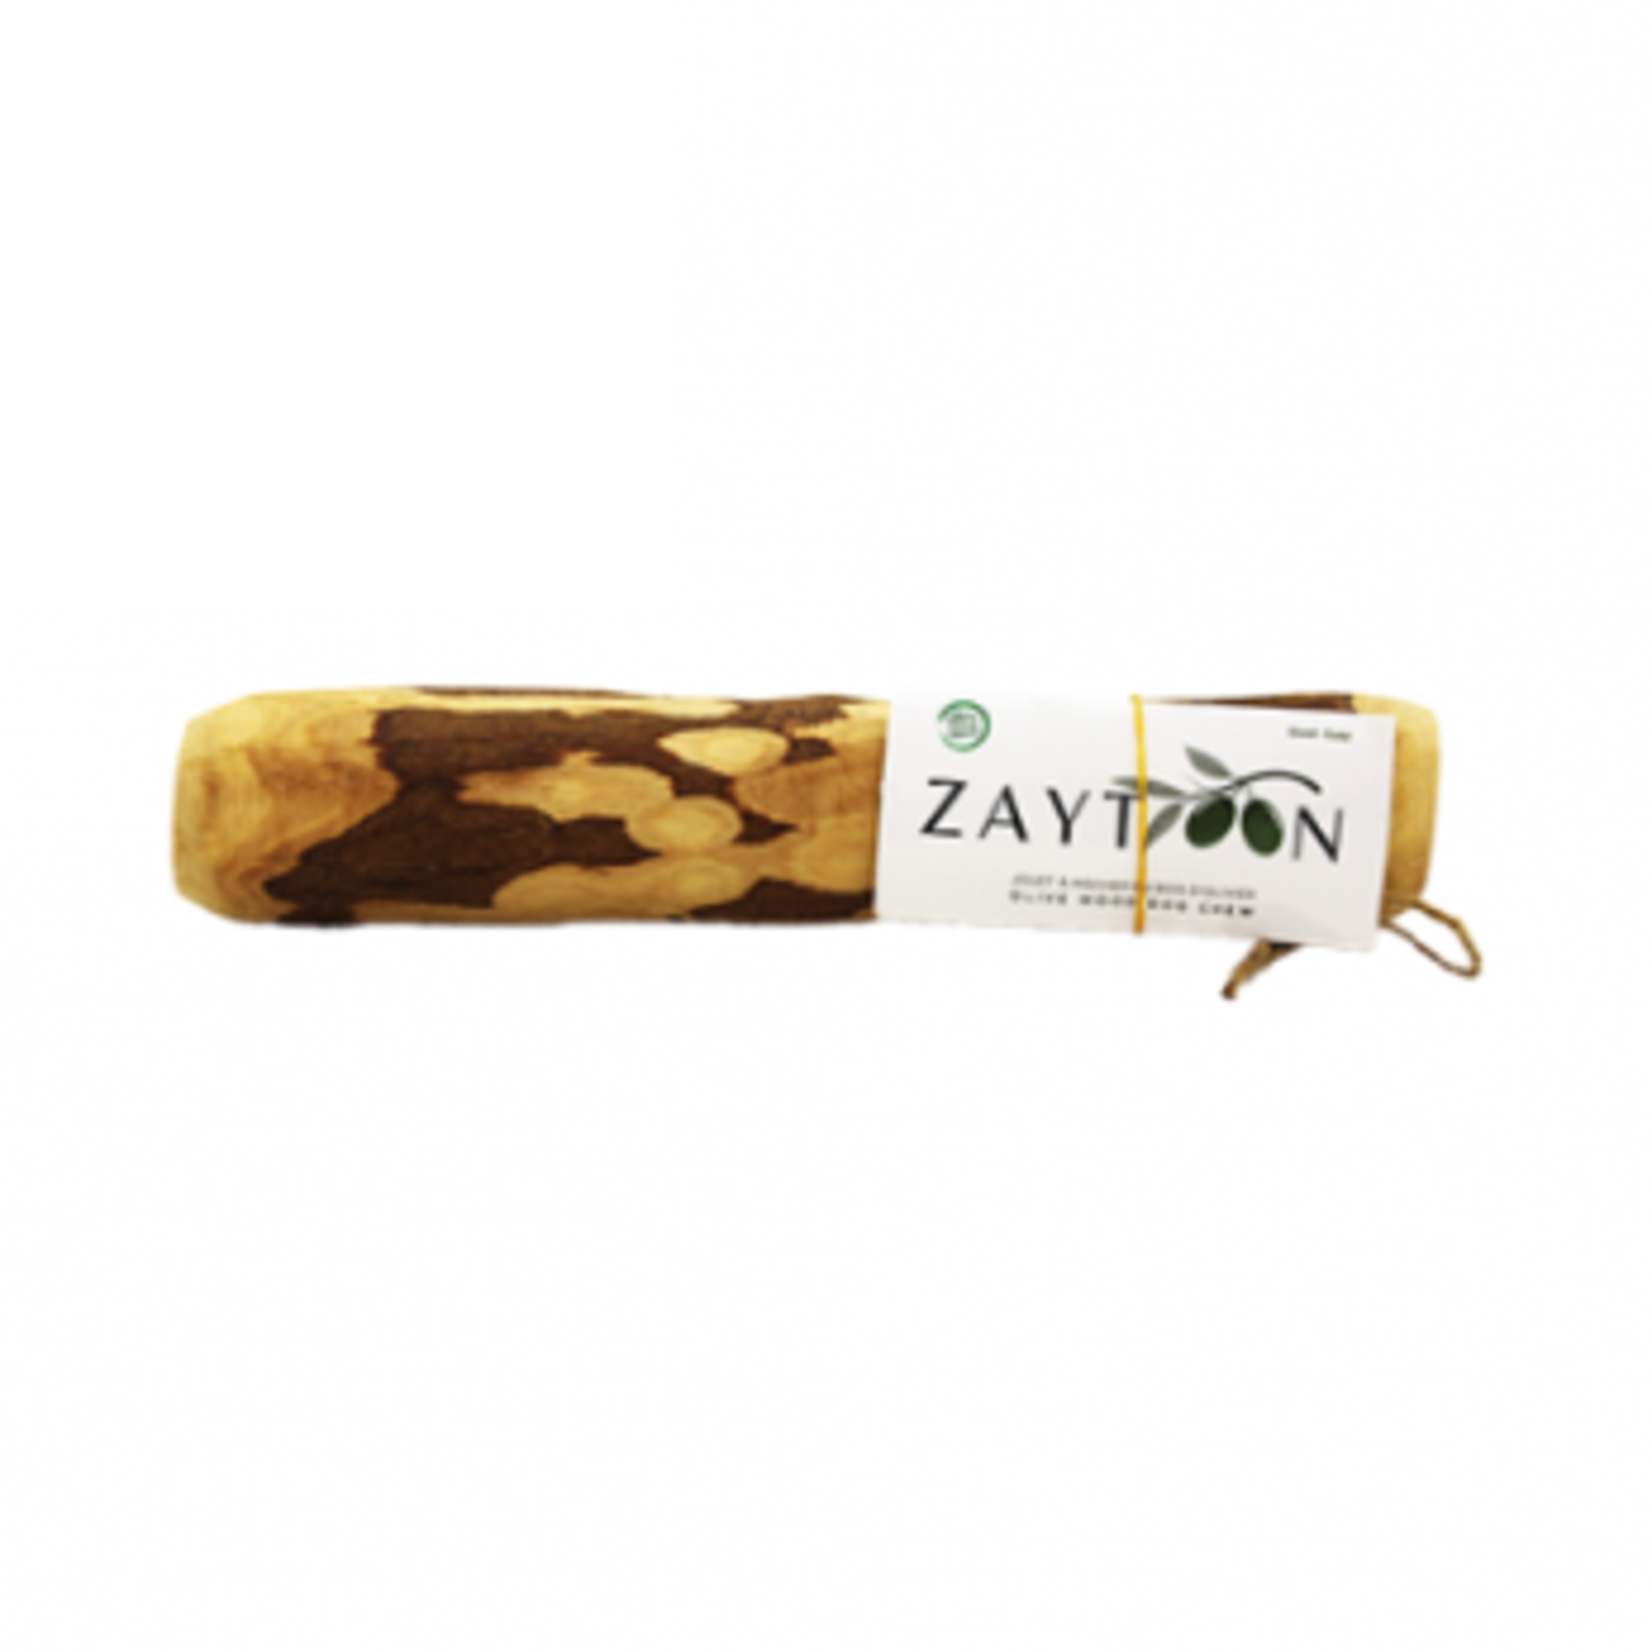 Zaytoon Olive wood Chew